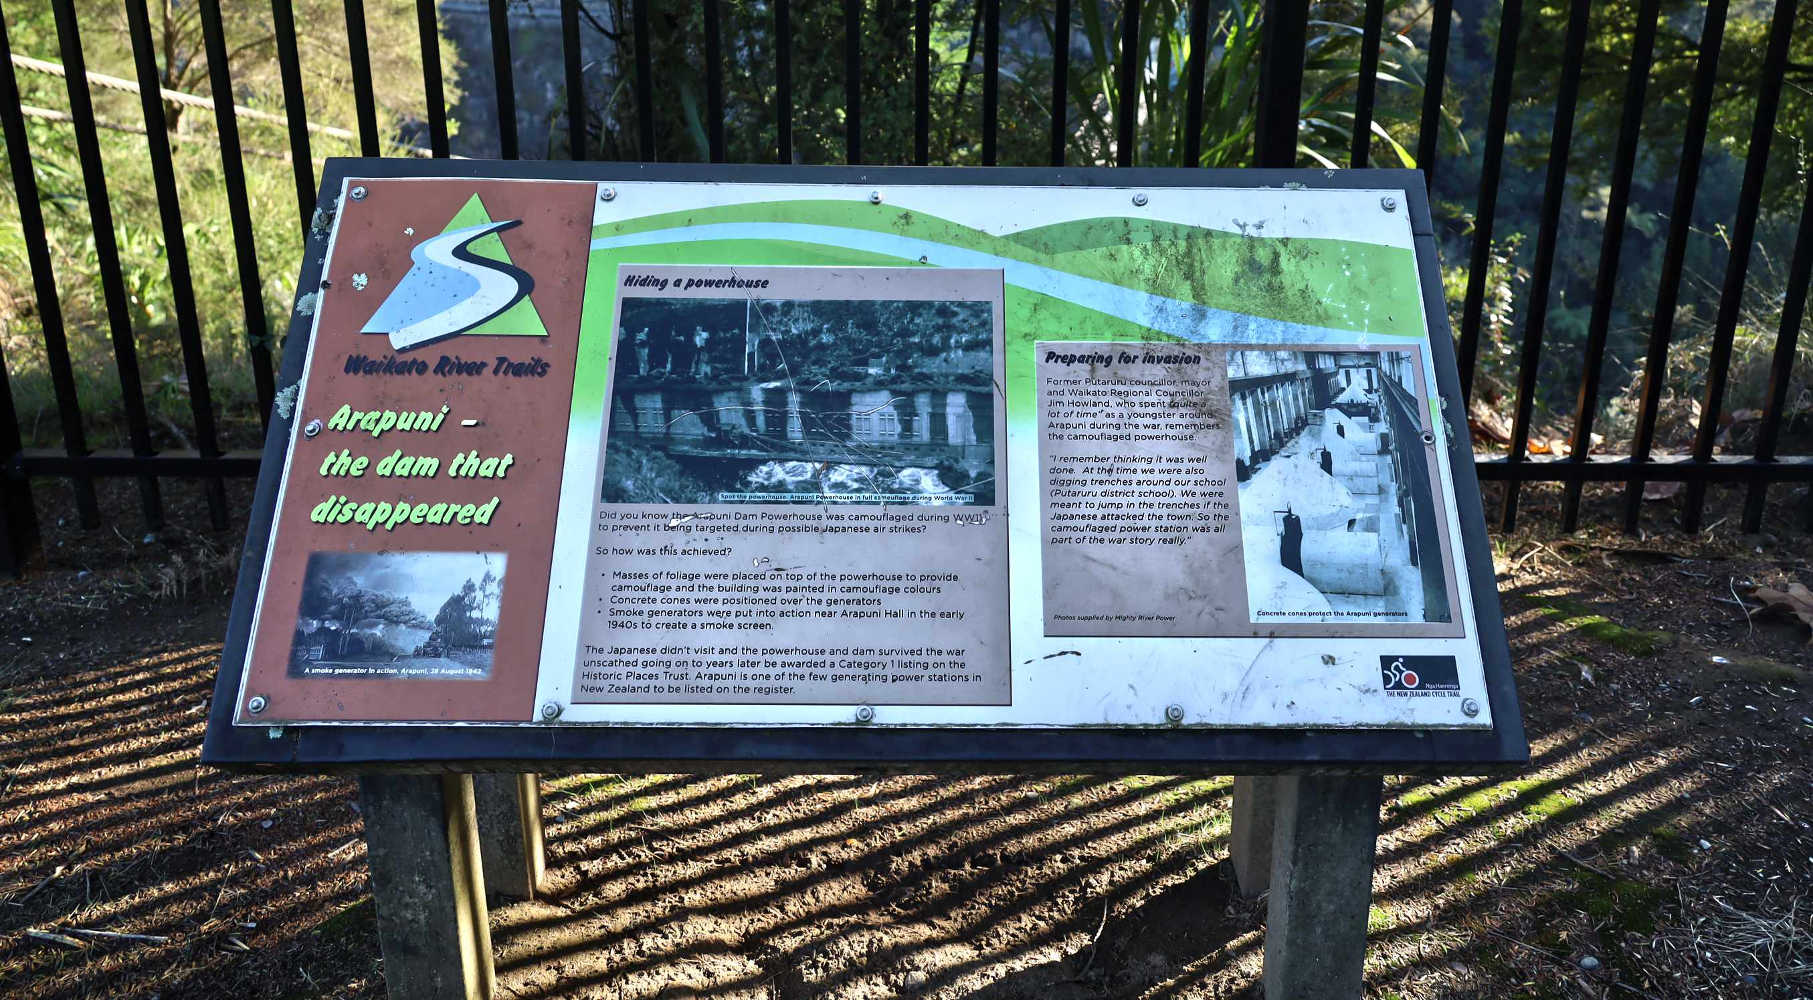 Waikato river trail, Arapuni WWII dam story, signage, Waikato, New Zealand